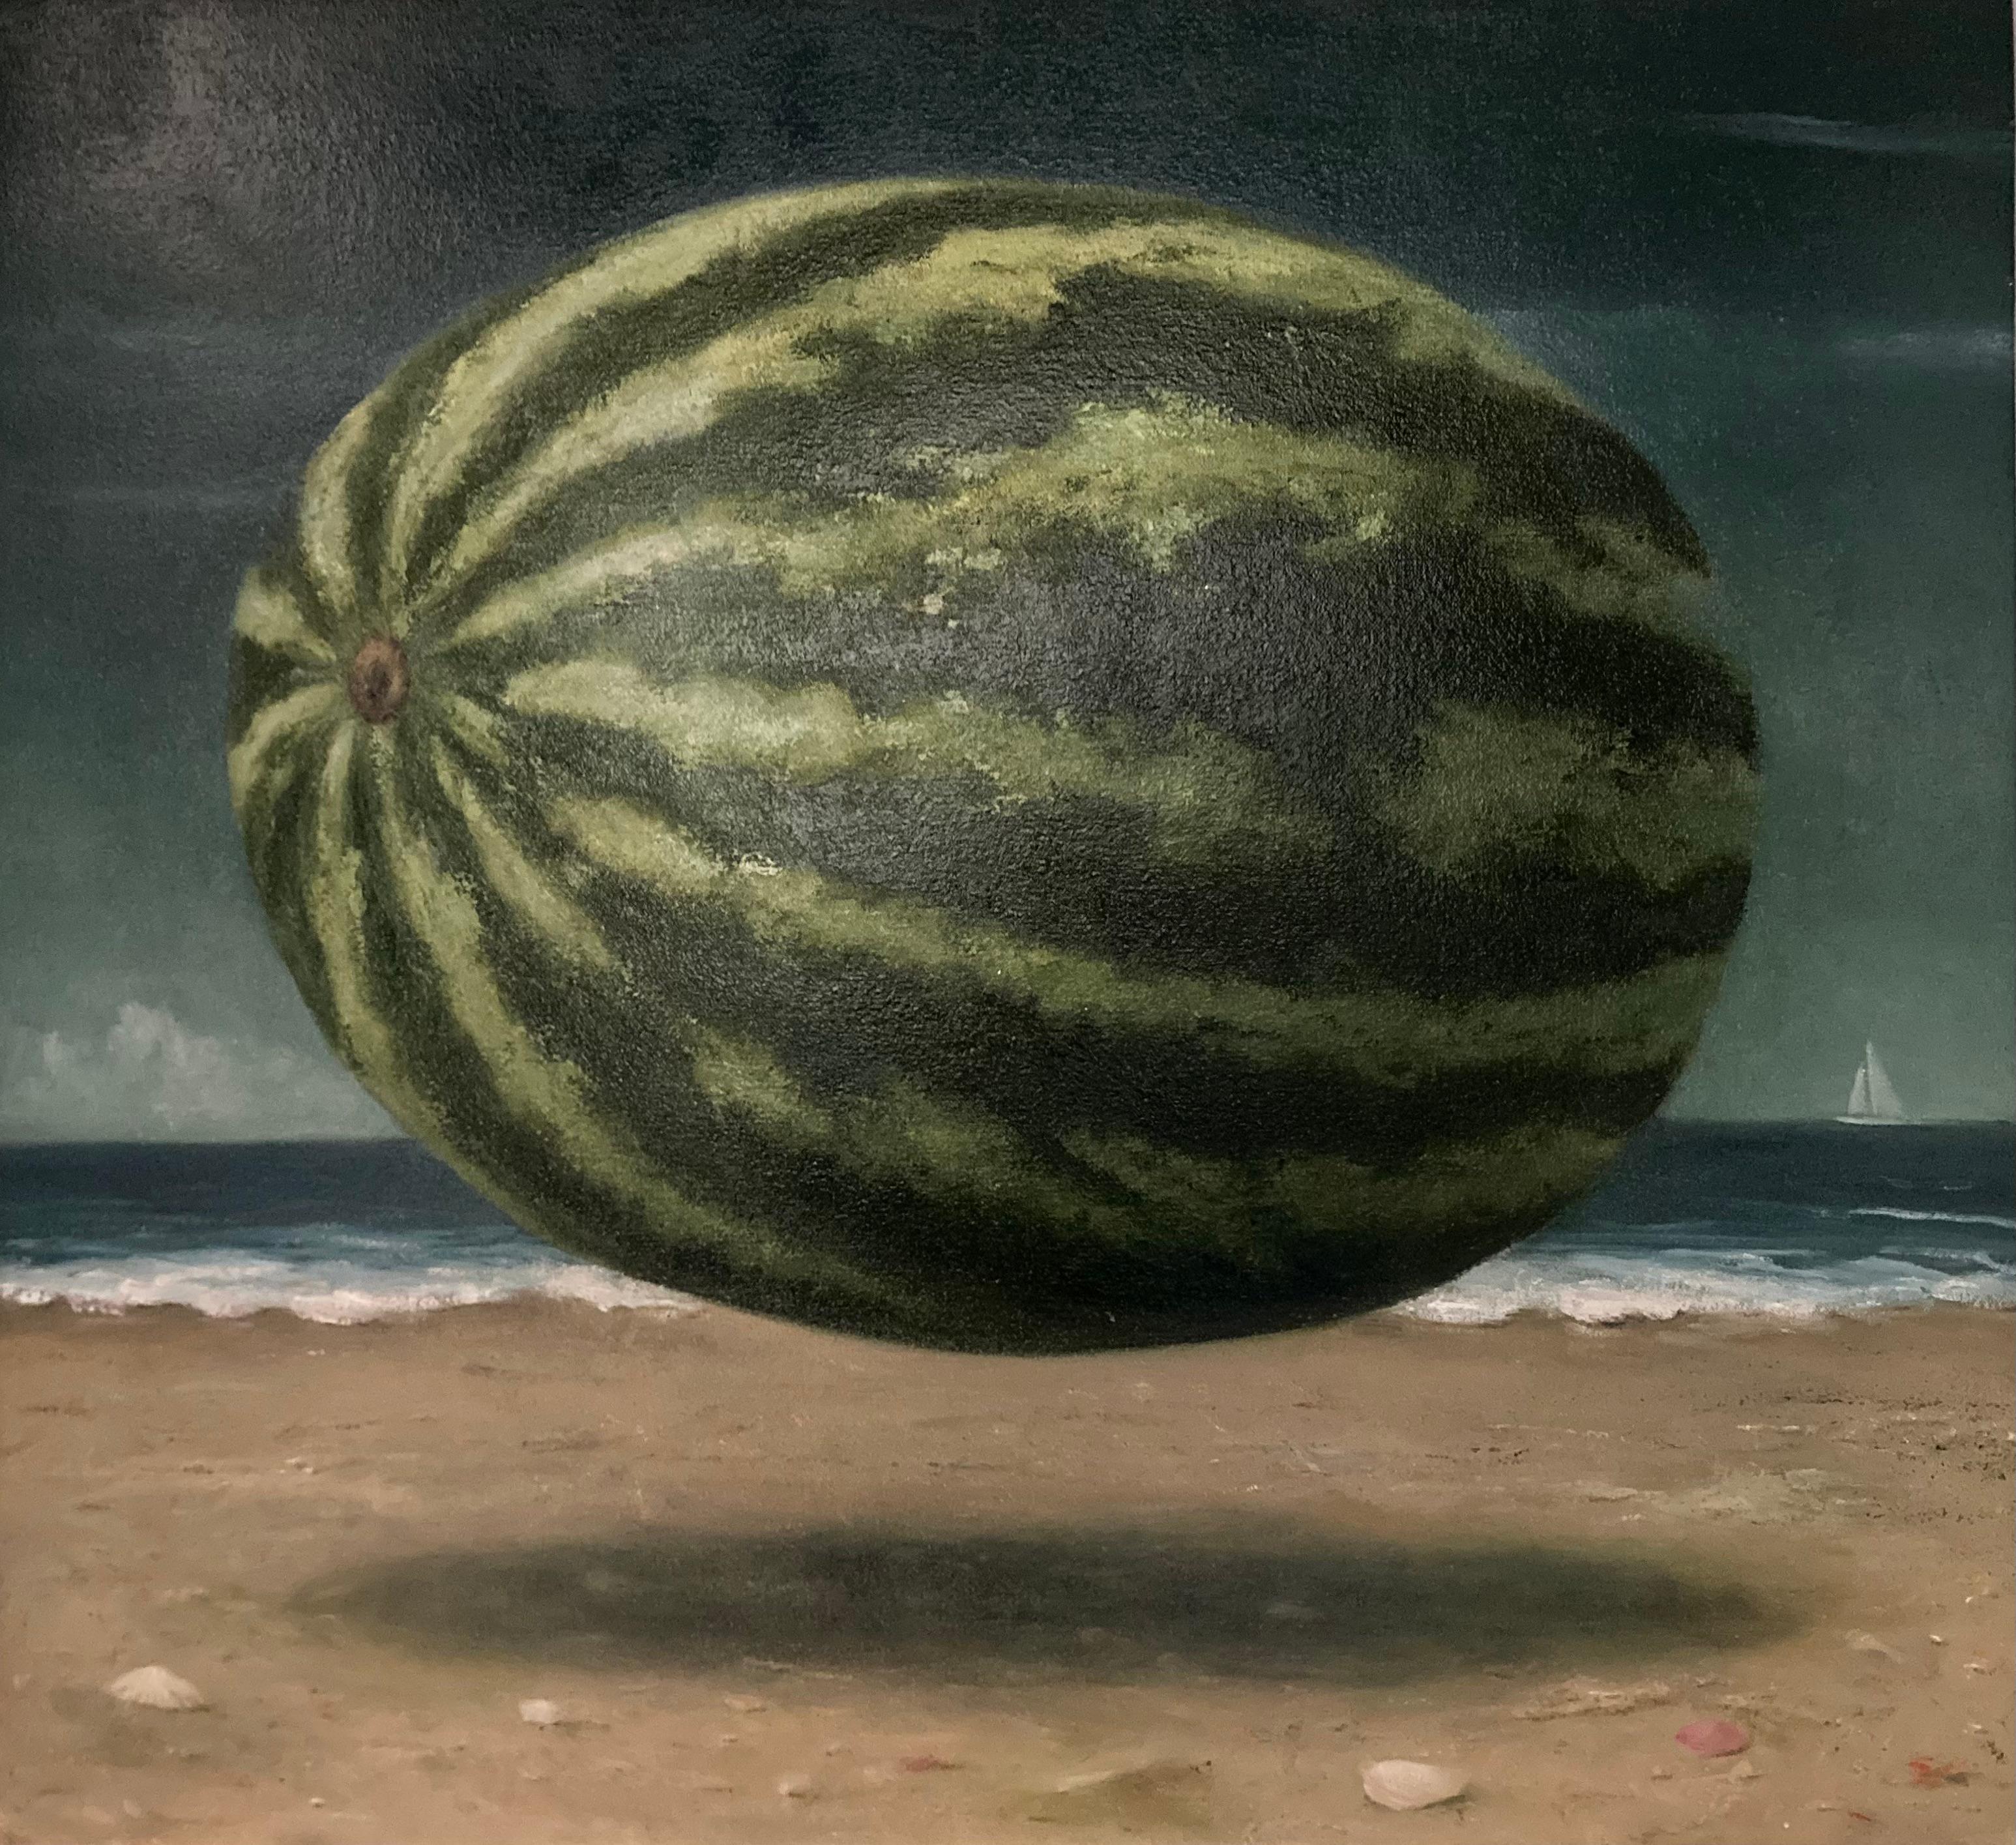 "Watermelon by the Sea" surrealistic still life on the beach, Florida